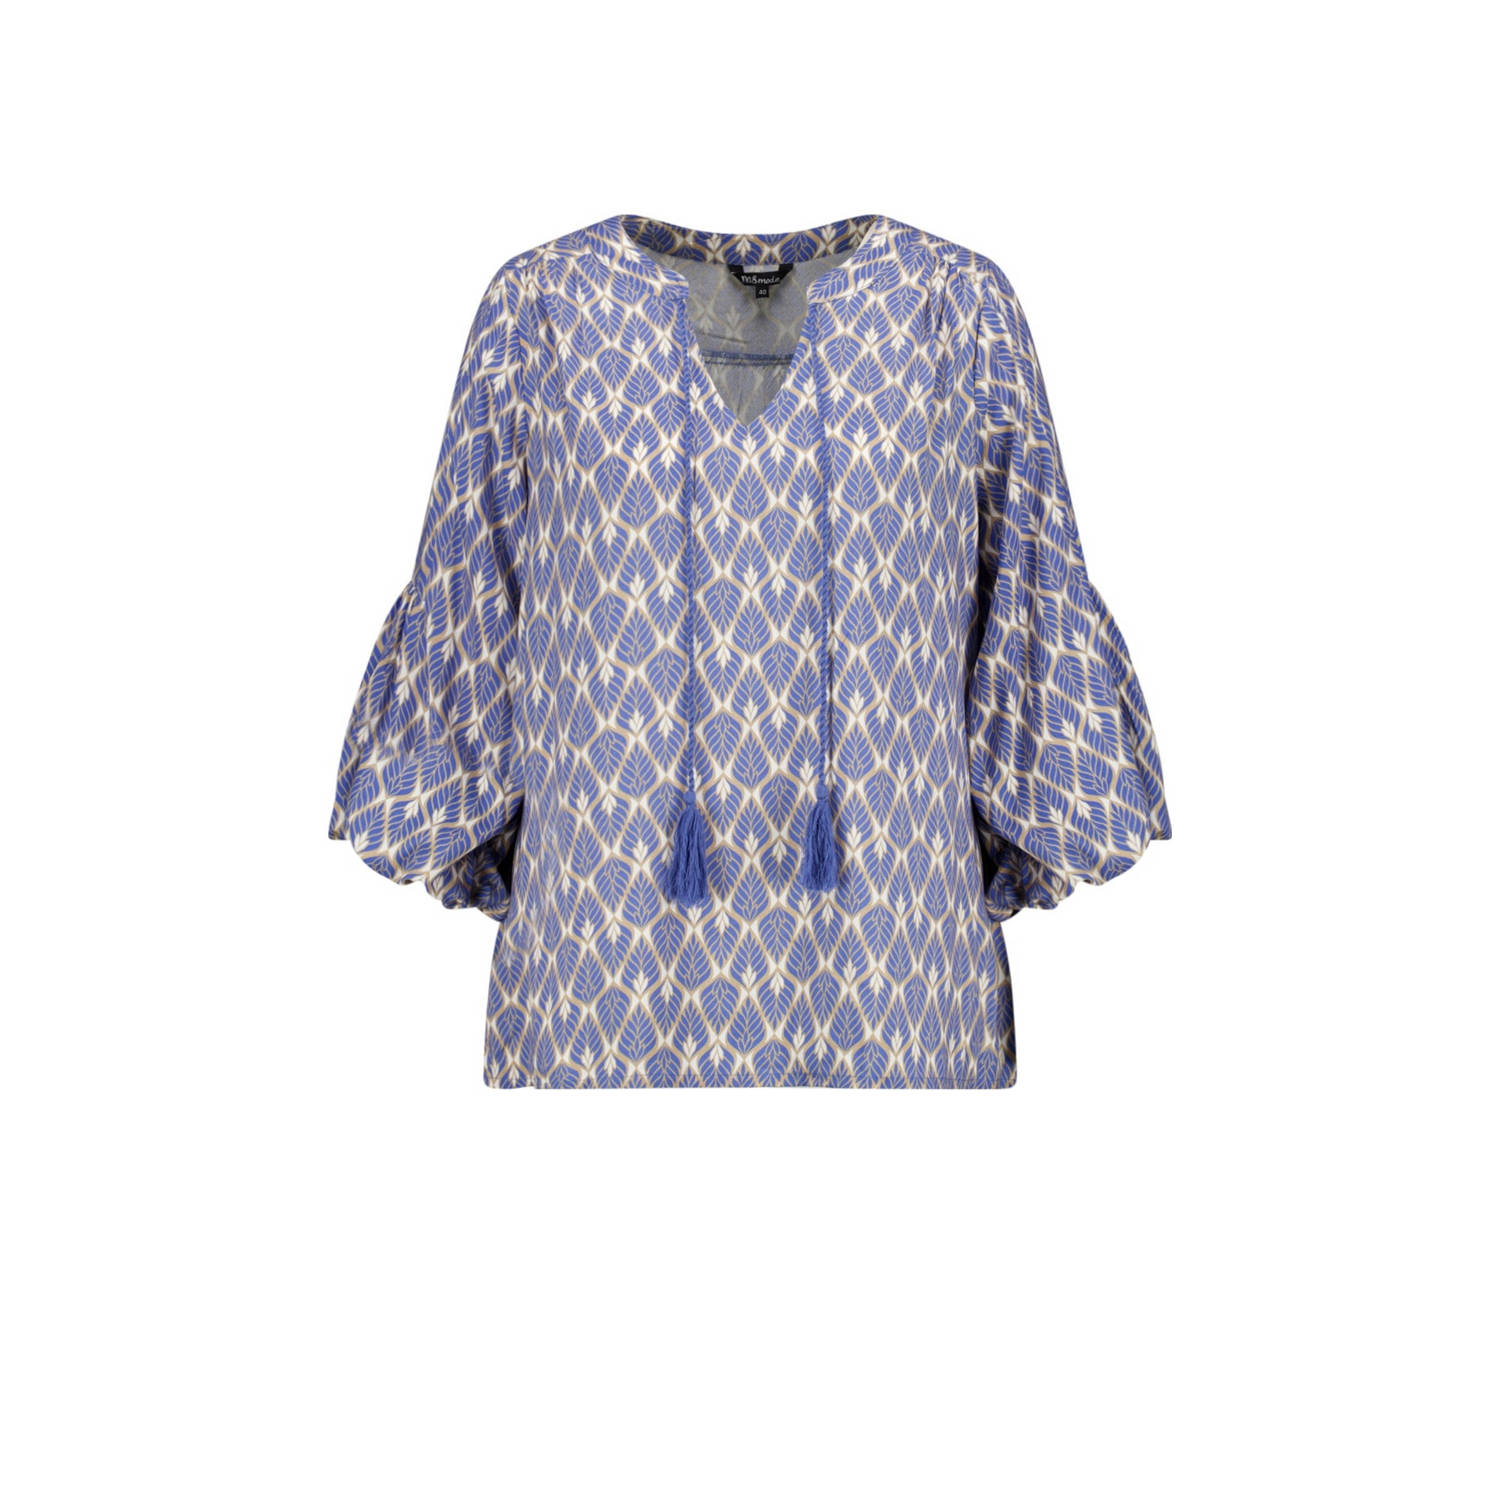 MS Mode blousetop met all over print lichtblauw